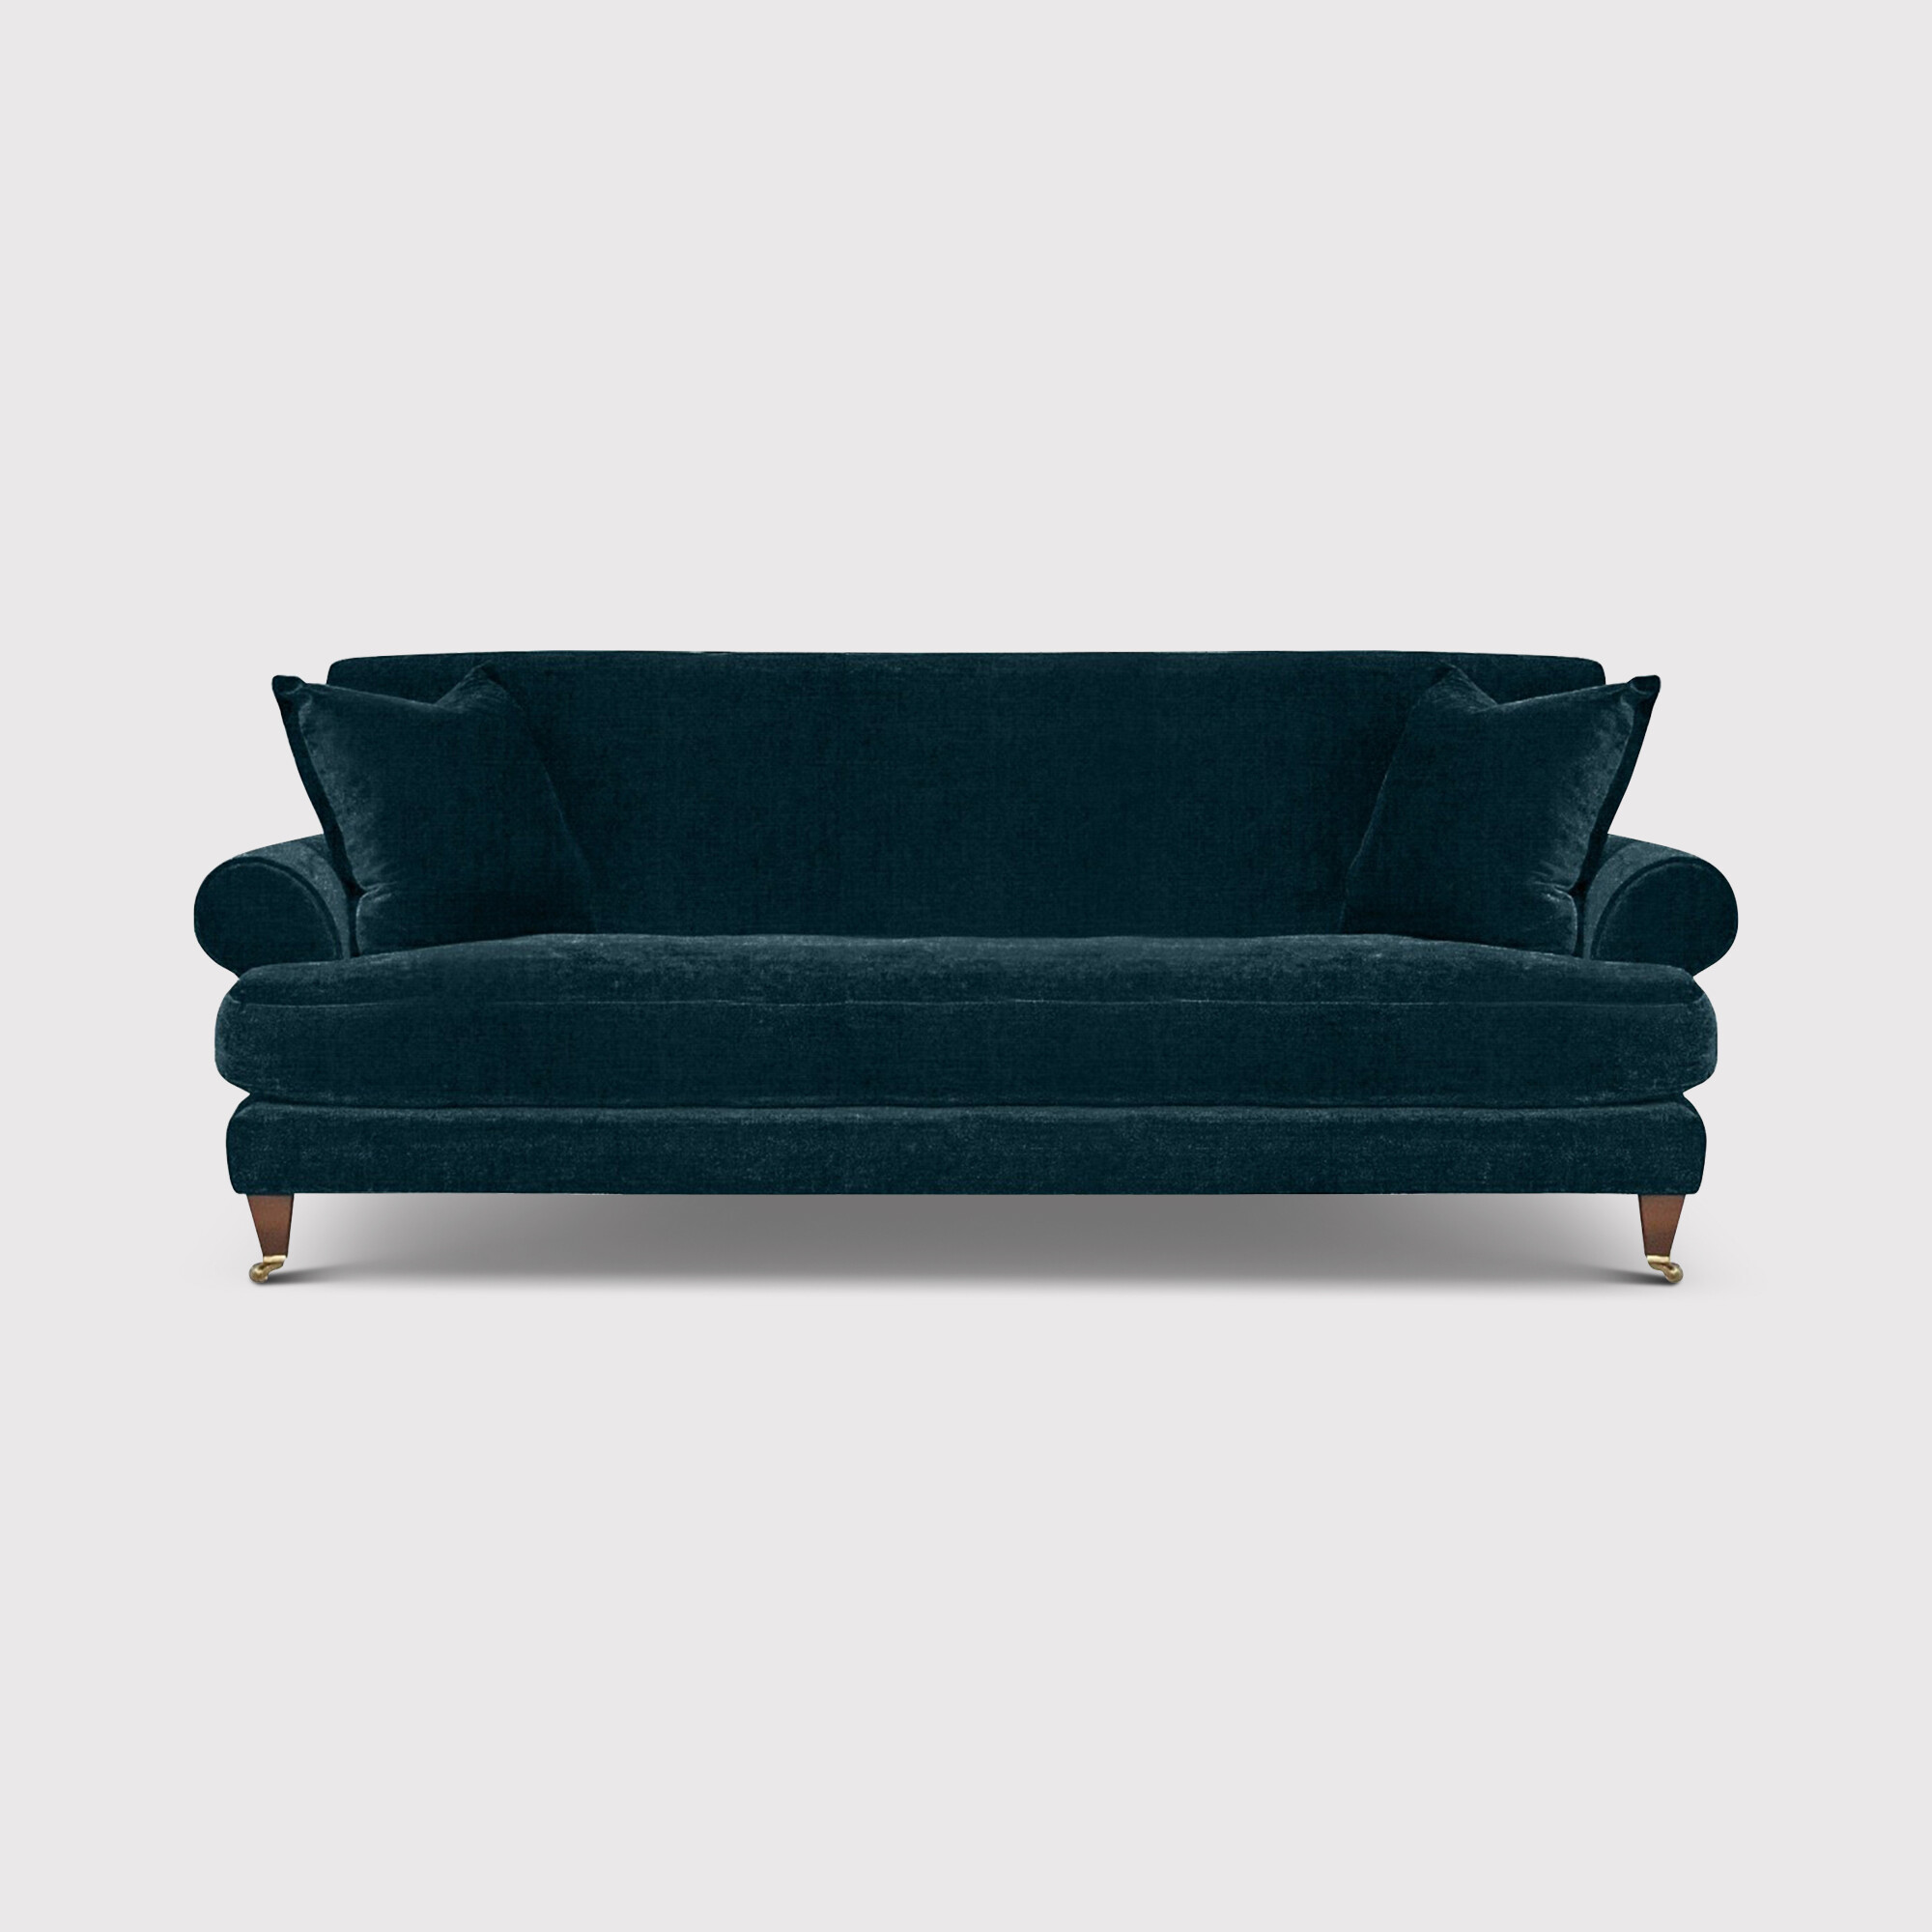 Fairlawn 3 Seater Sofa, Teal Fabric | Barker & Stonehouse